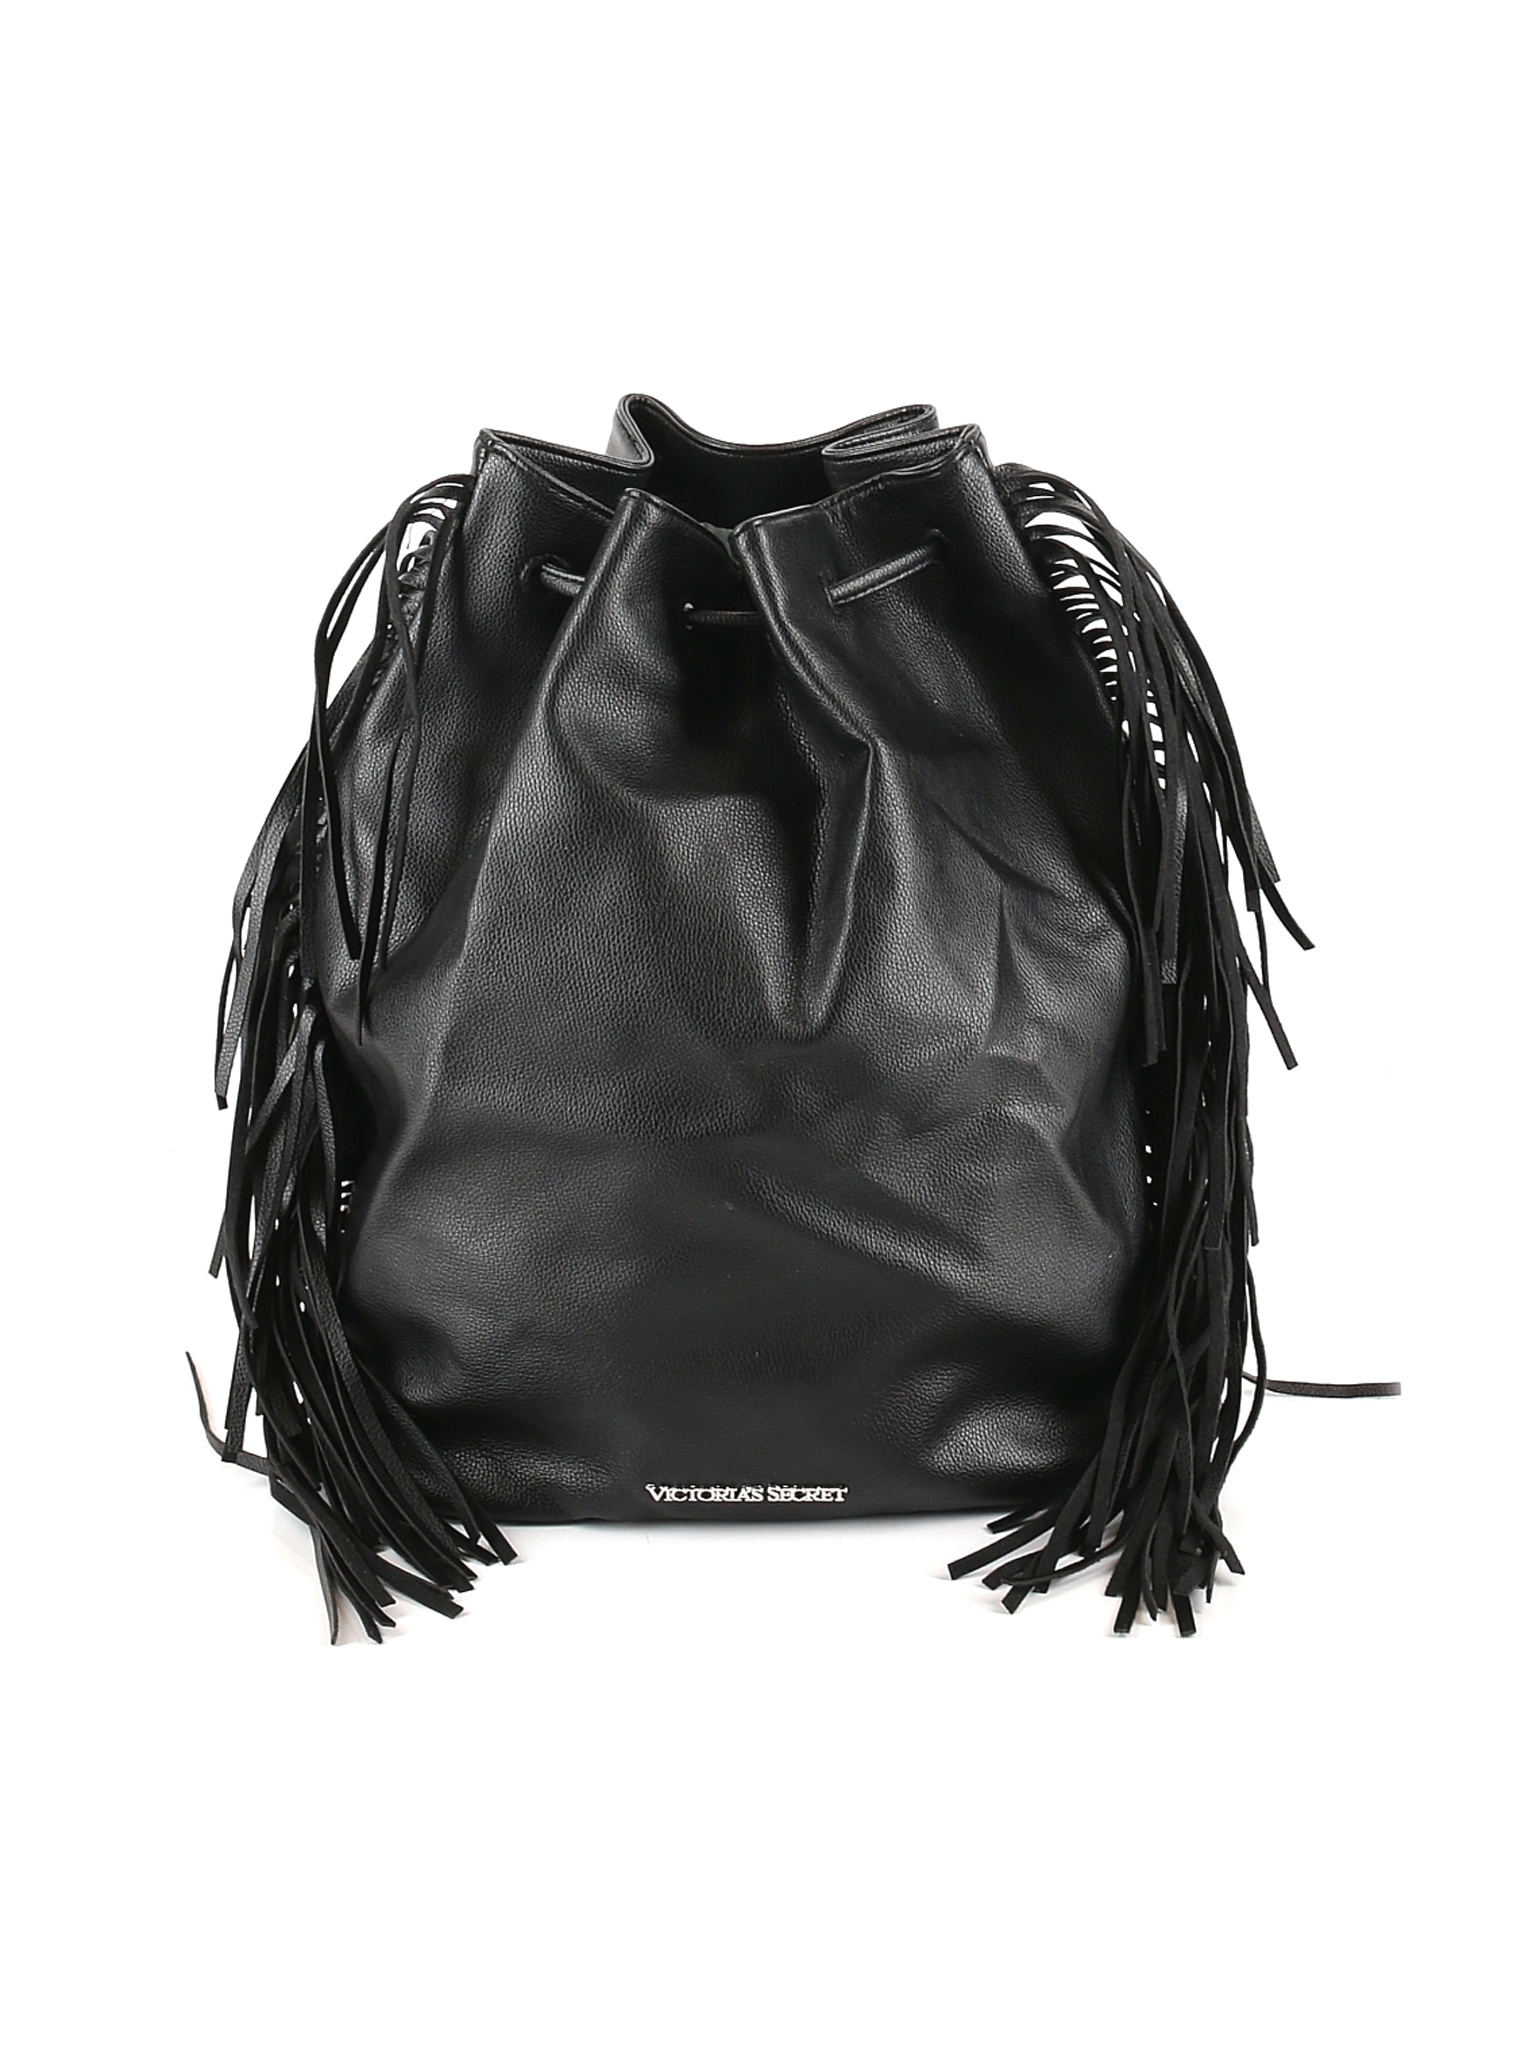 Victoria's Secret Women Black Backpack One Size | eBay